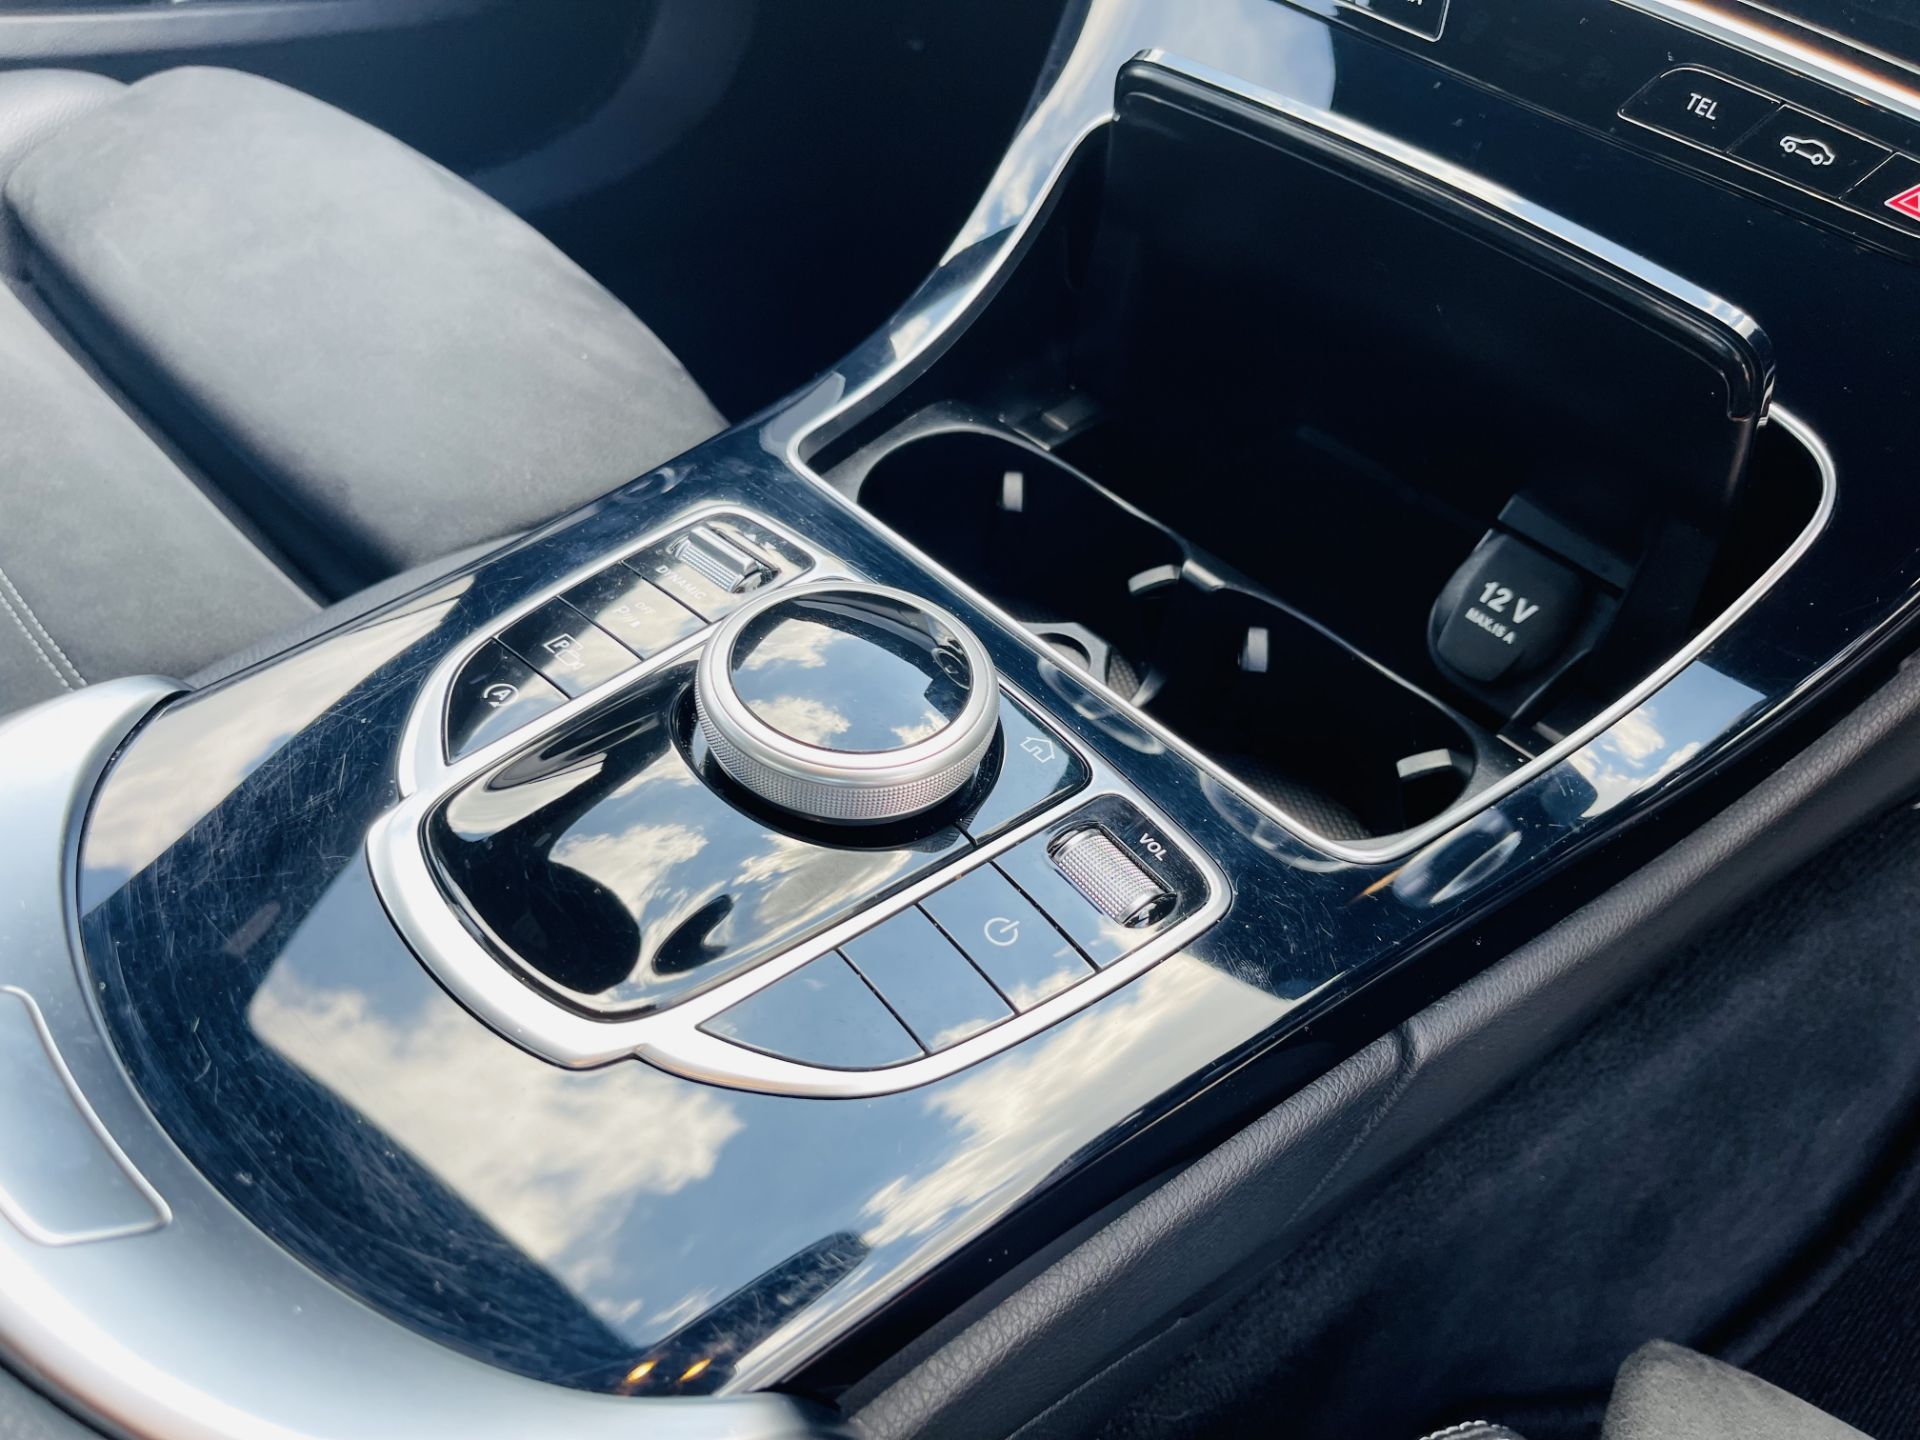 Mercedes Benz C220 AMG Line 9G-Tronic Auto 2019 ‘69 Reg’ - Sat Nav - A/C - Euro 6 - ULEZ Compliant - Image 20 of 30